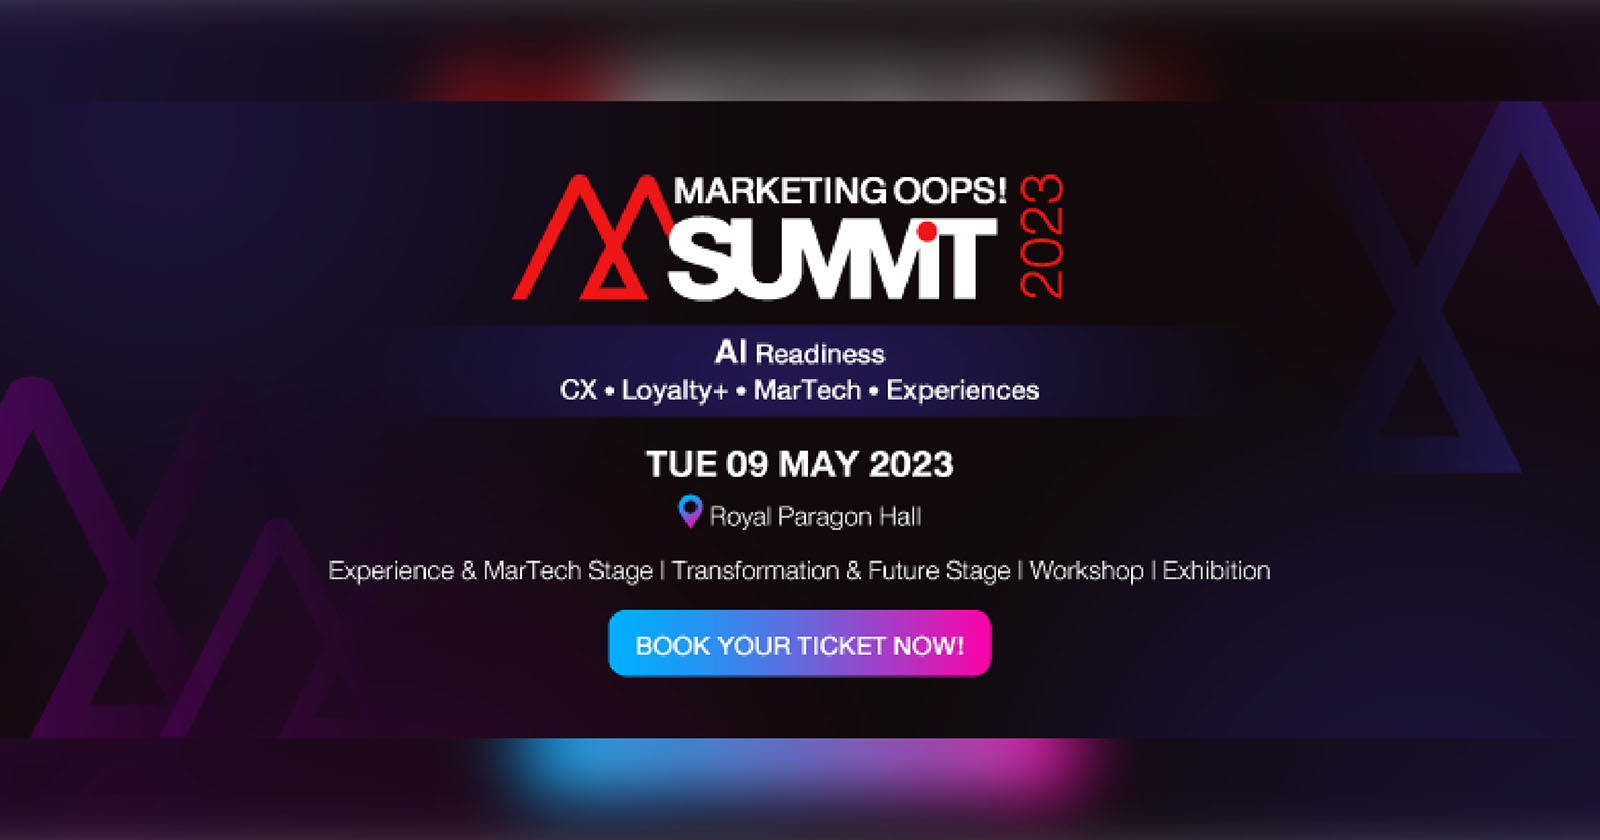 Marketing Oops! Summit 2023